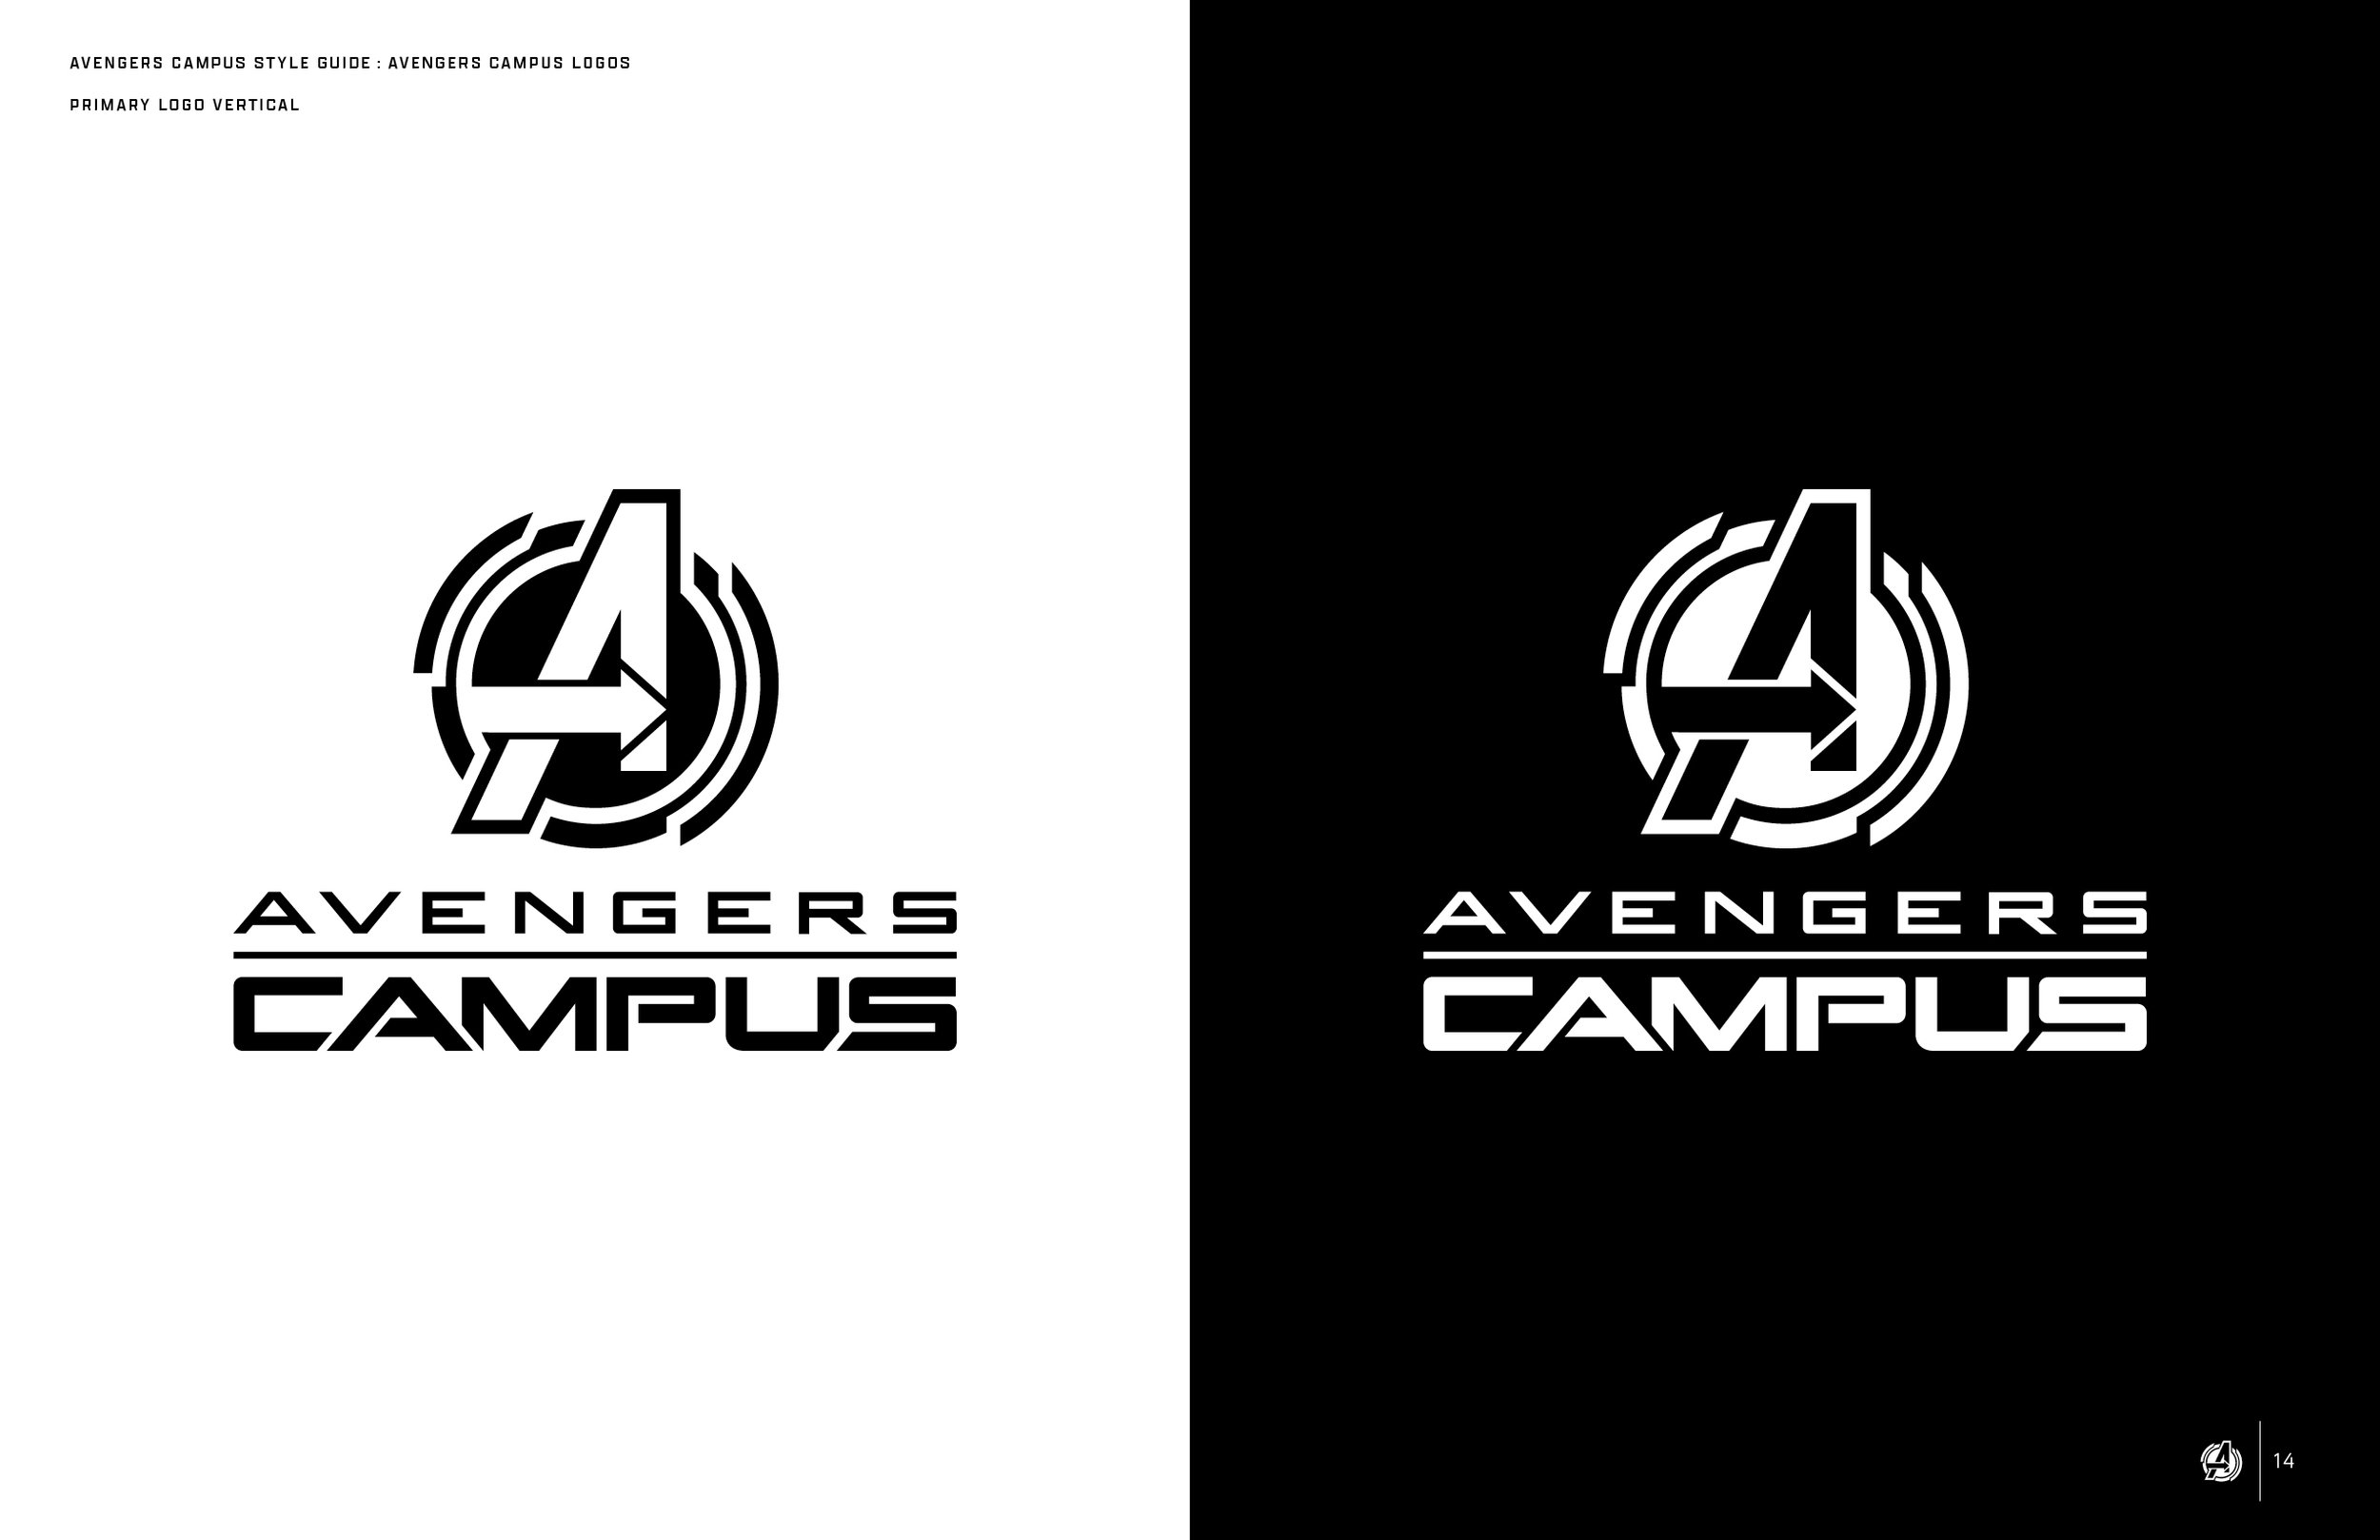 AvengersCampus_StyleGuide_Website_14.jpg